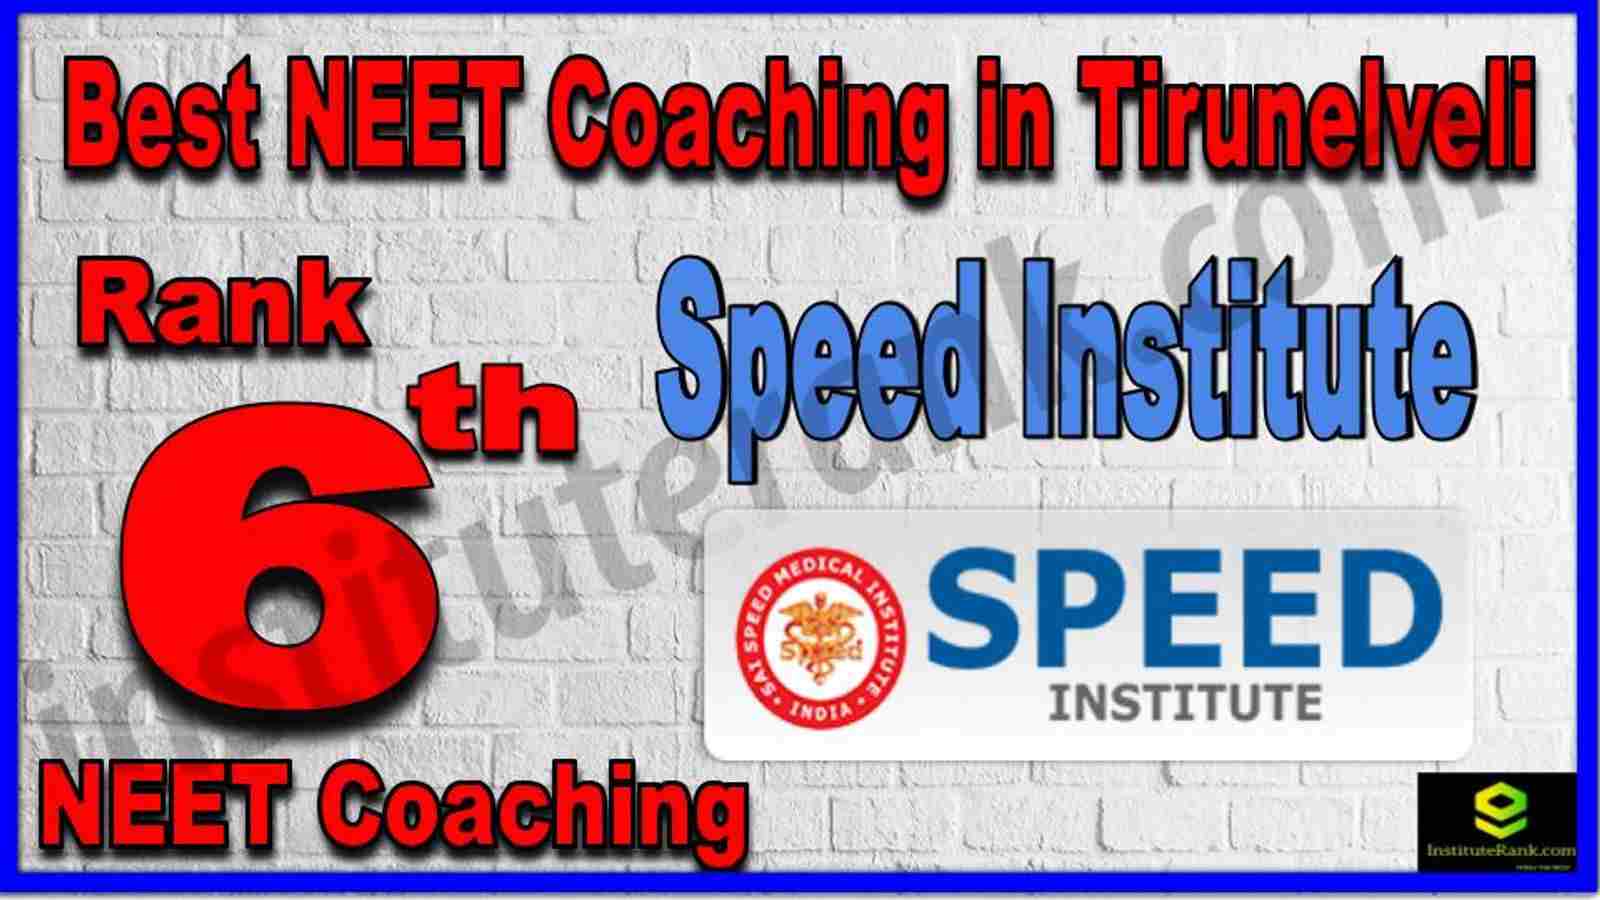 Rank 6th Best NEET Coaching in Tirunelveli